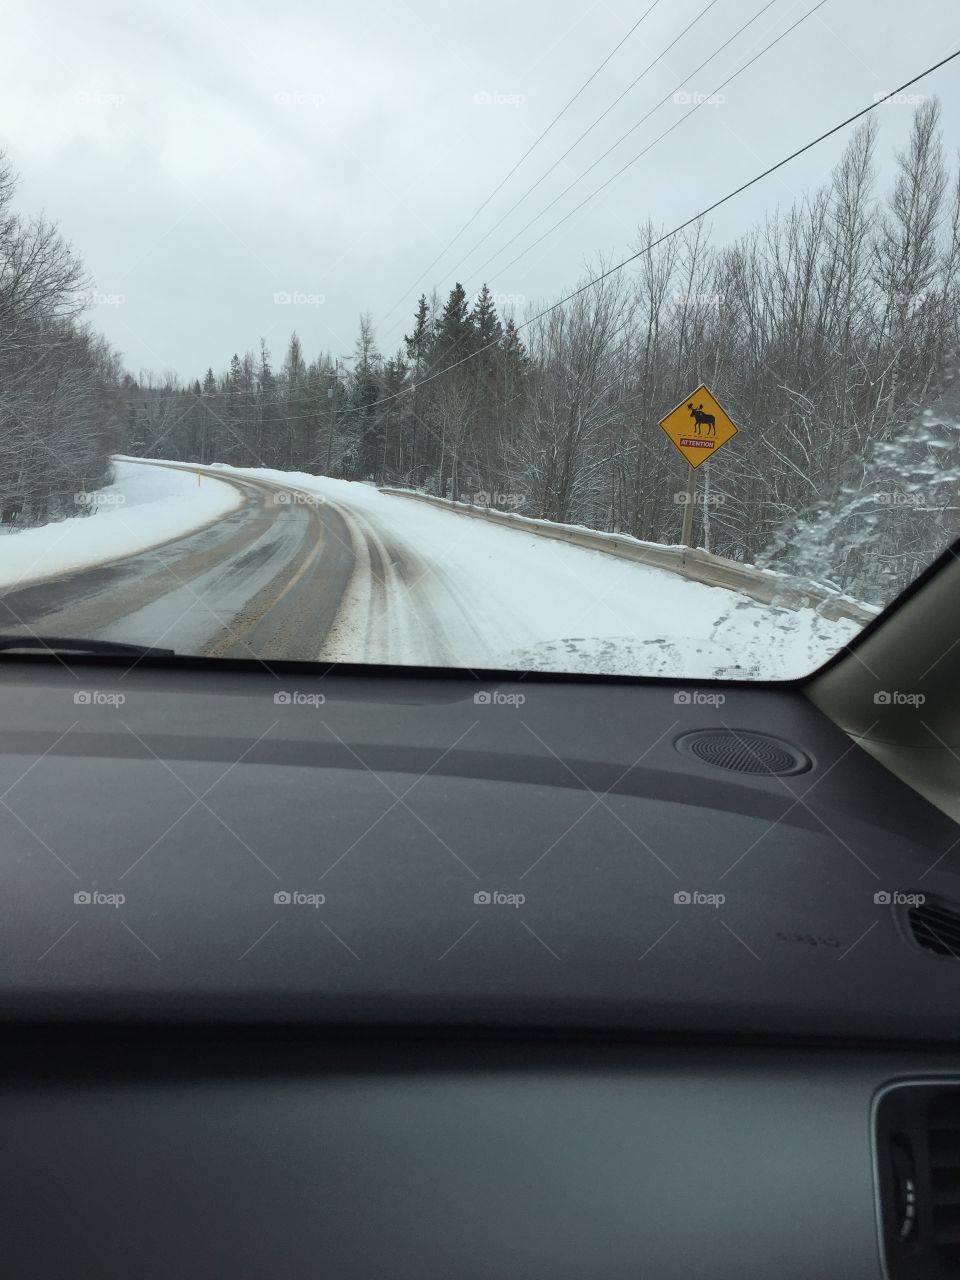 New Brunswick Winter Roads